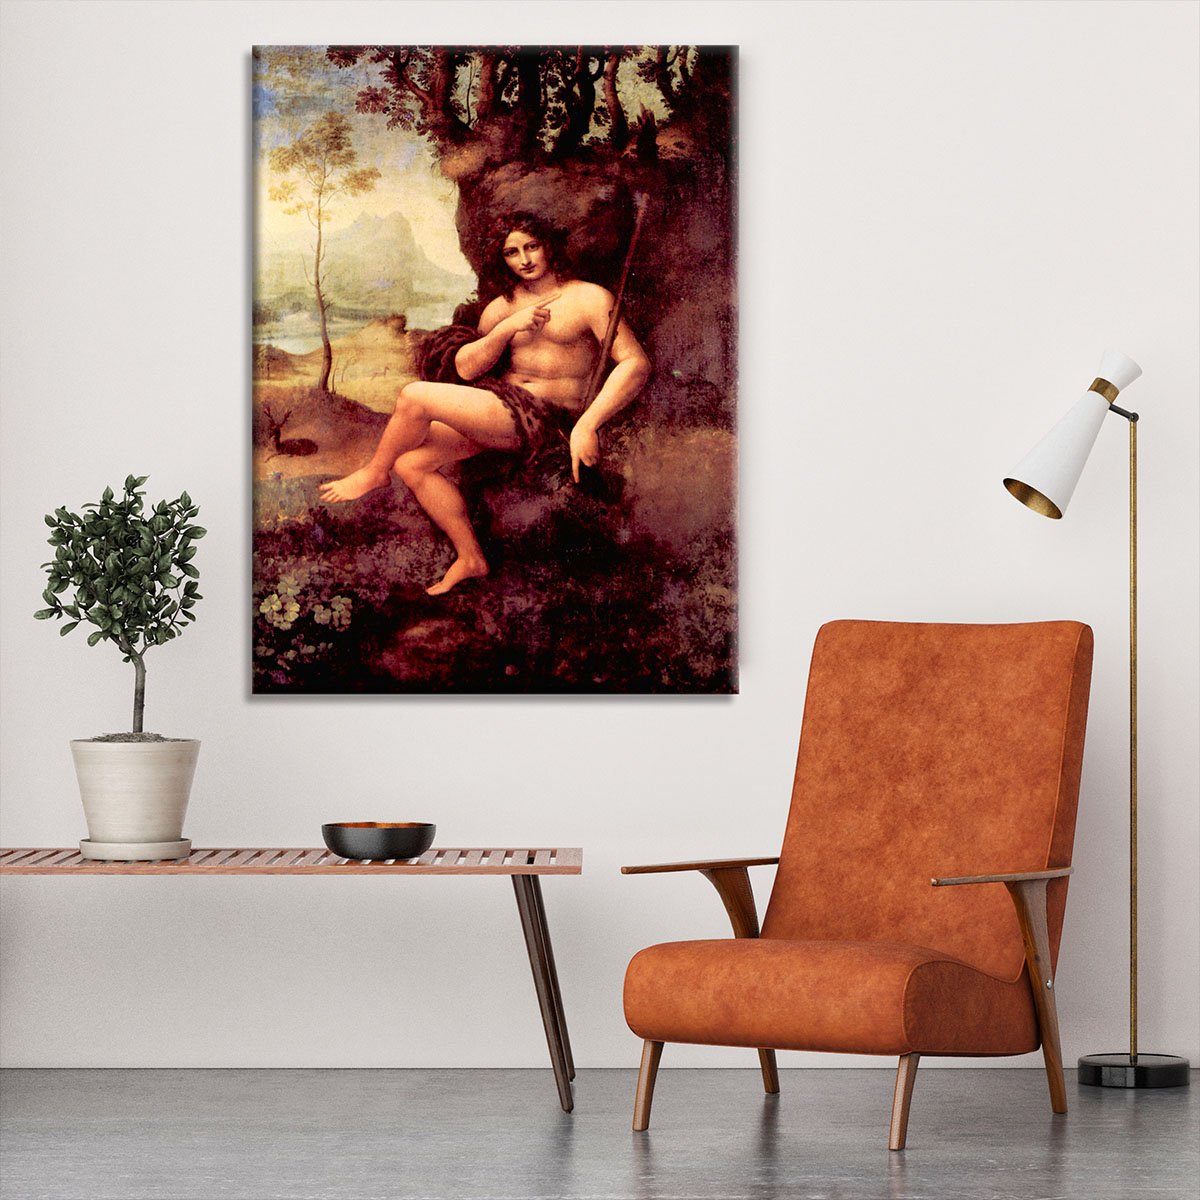 Bacchus by Da Vinci Canvas Print or Poster